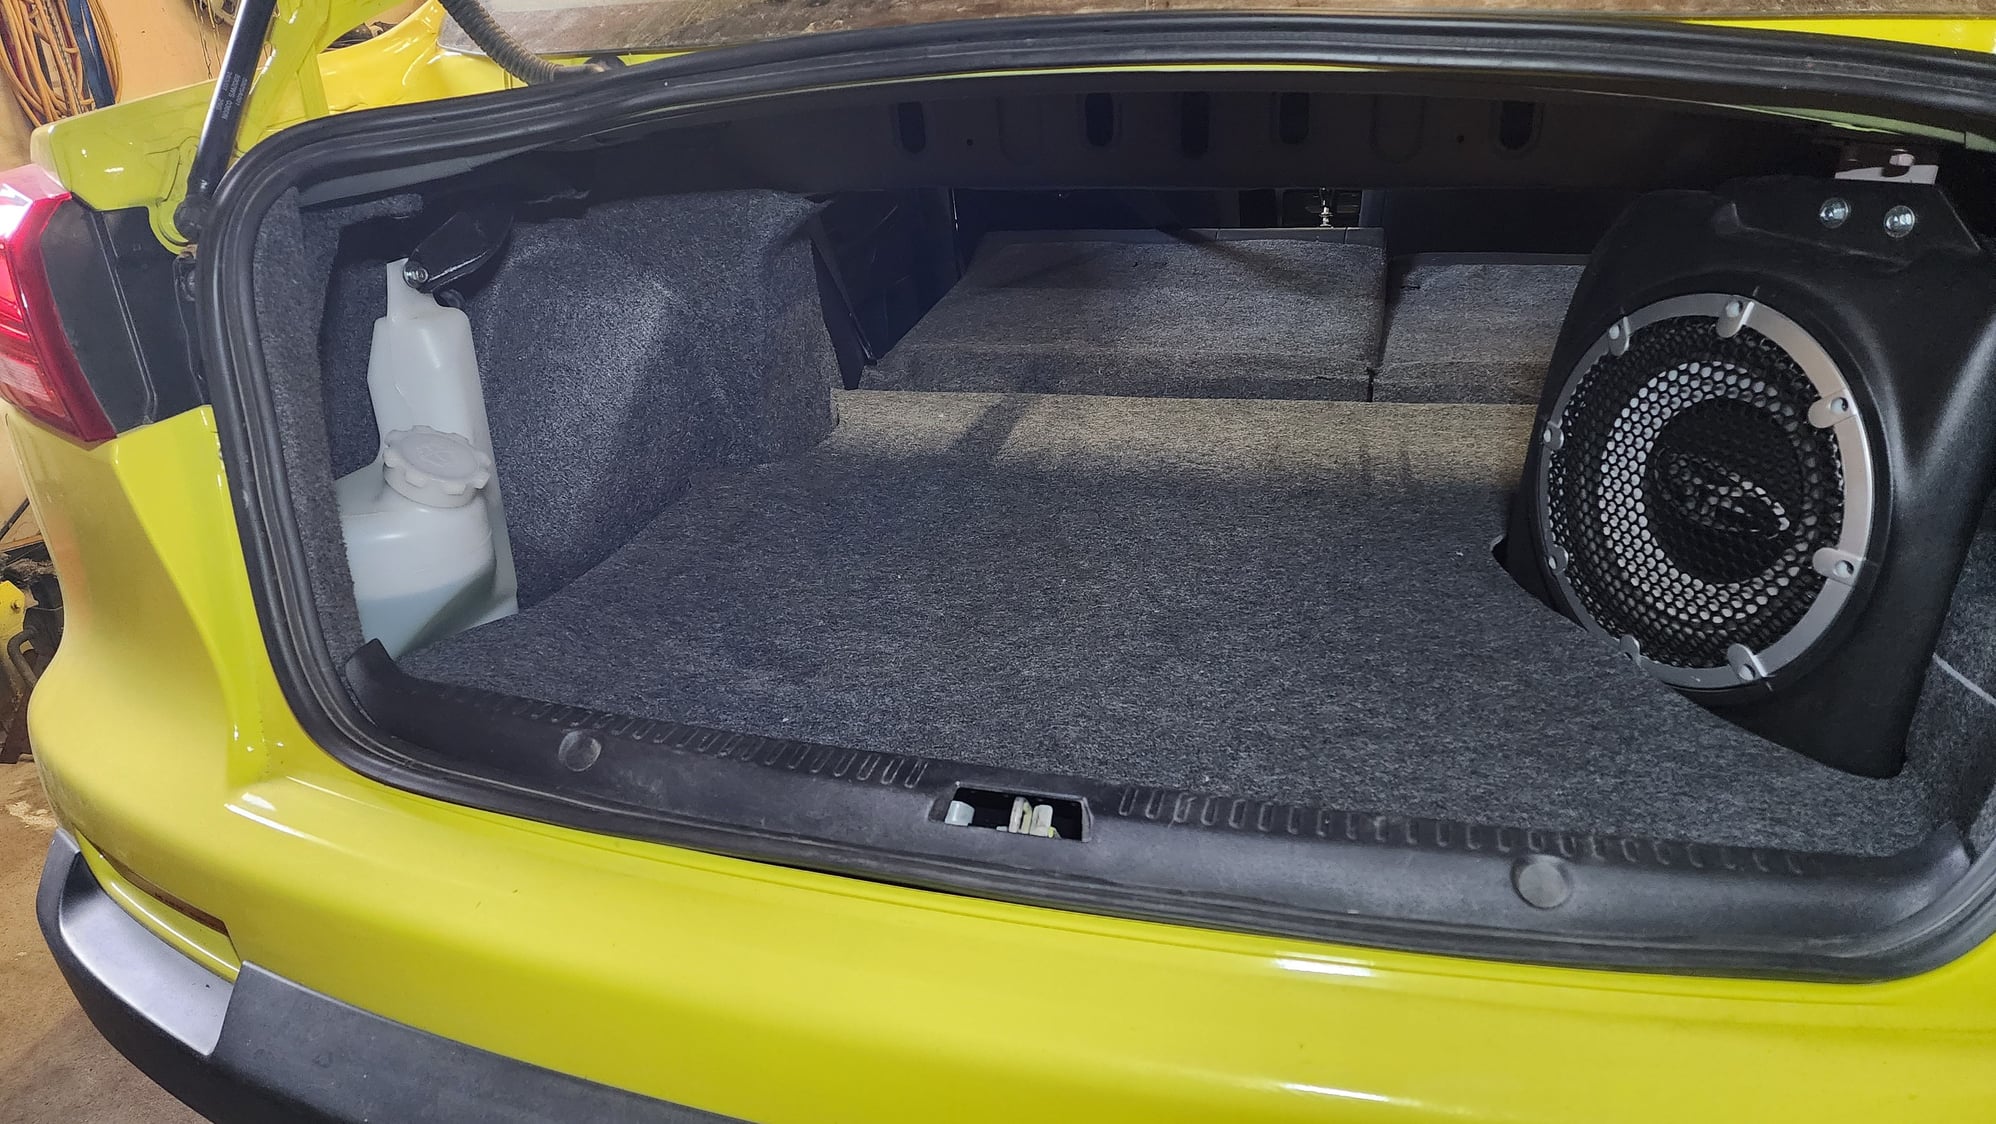 Folding rear seats in an Evo - EvolutionM - Mitsubishi Lancer and Lancer  Evolution Community